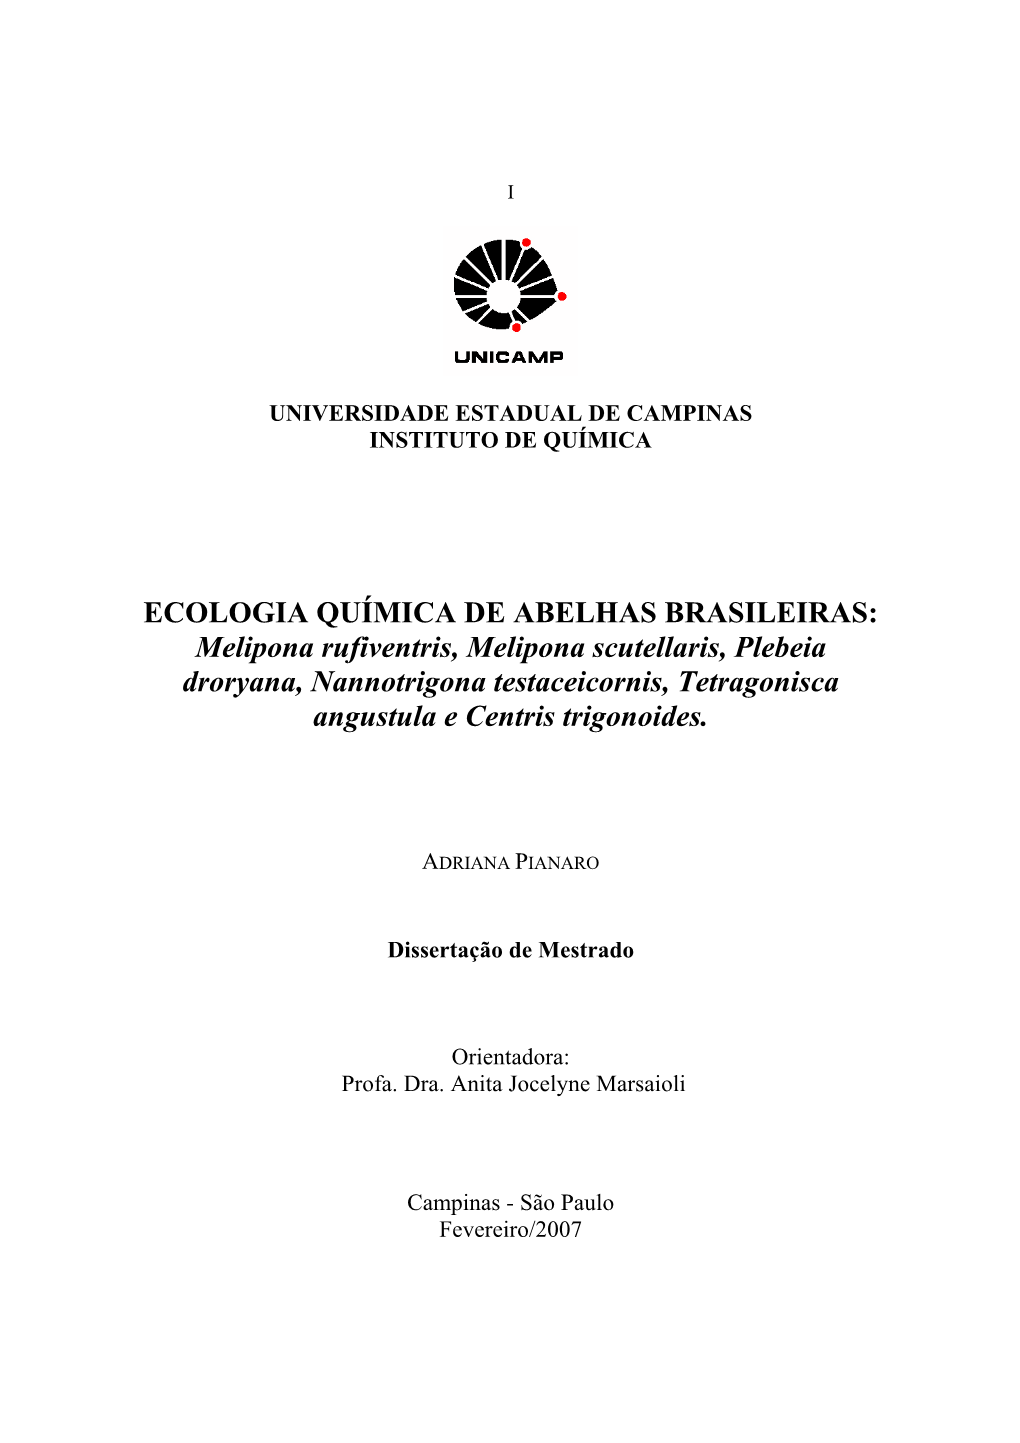 ECOLOGIA QUÍMICA DE ABELHAS BRASILEIRAS: Melipona Rufiventris